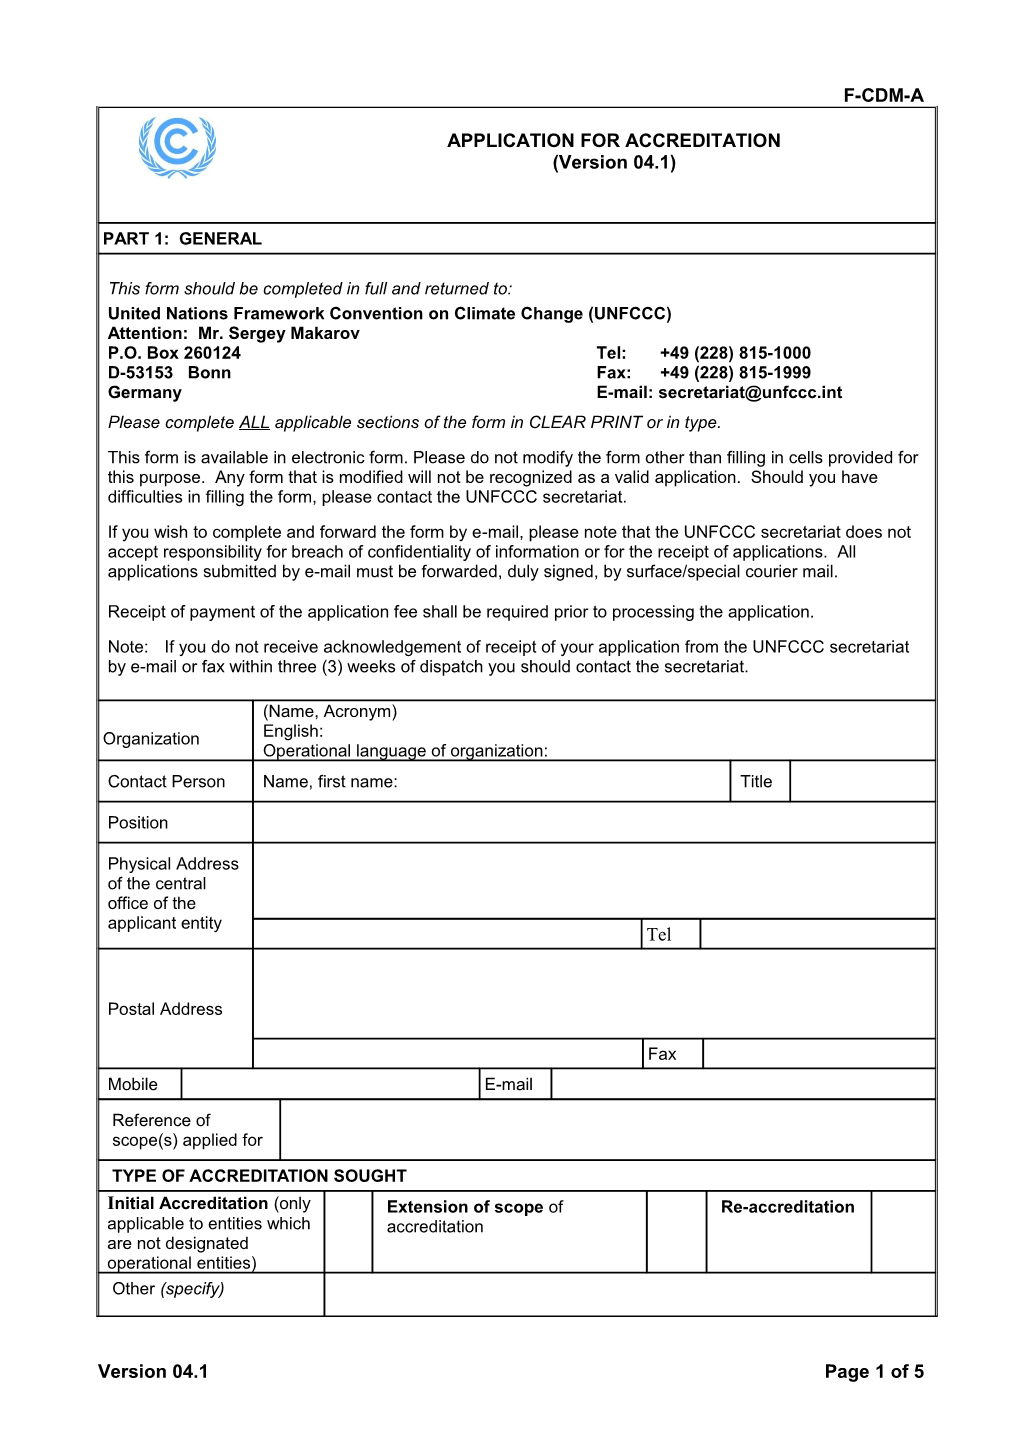 Application for Accreditation Form (F-CDM-A). (Version 04.1)